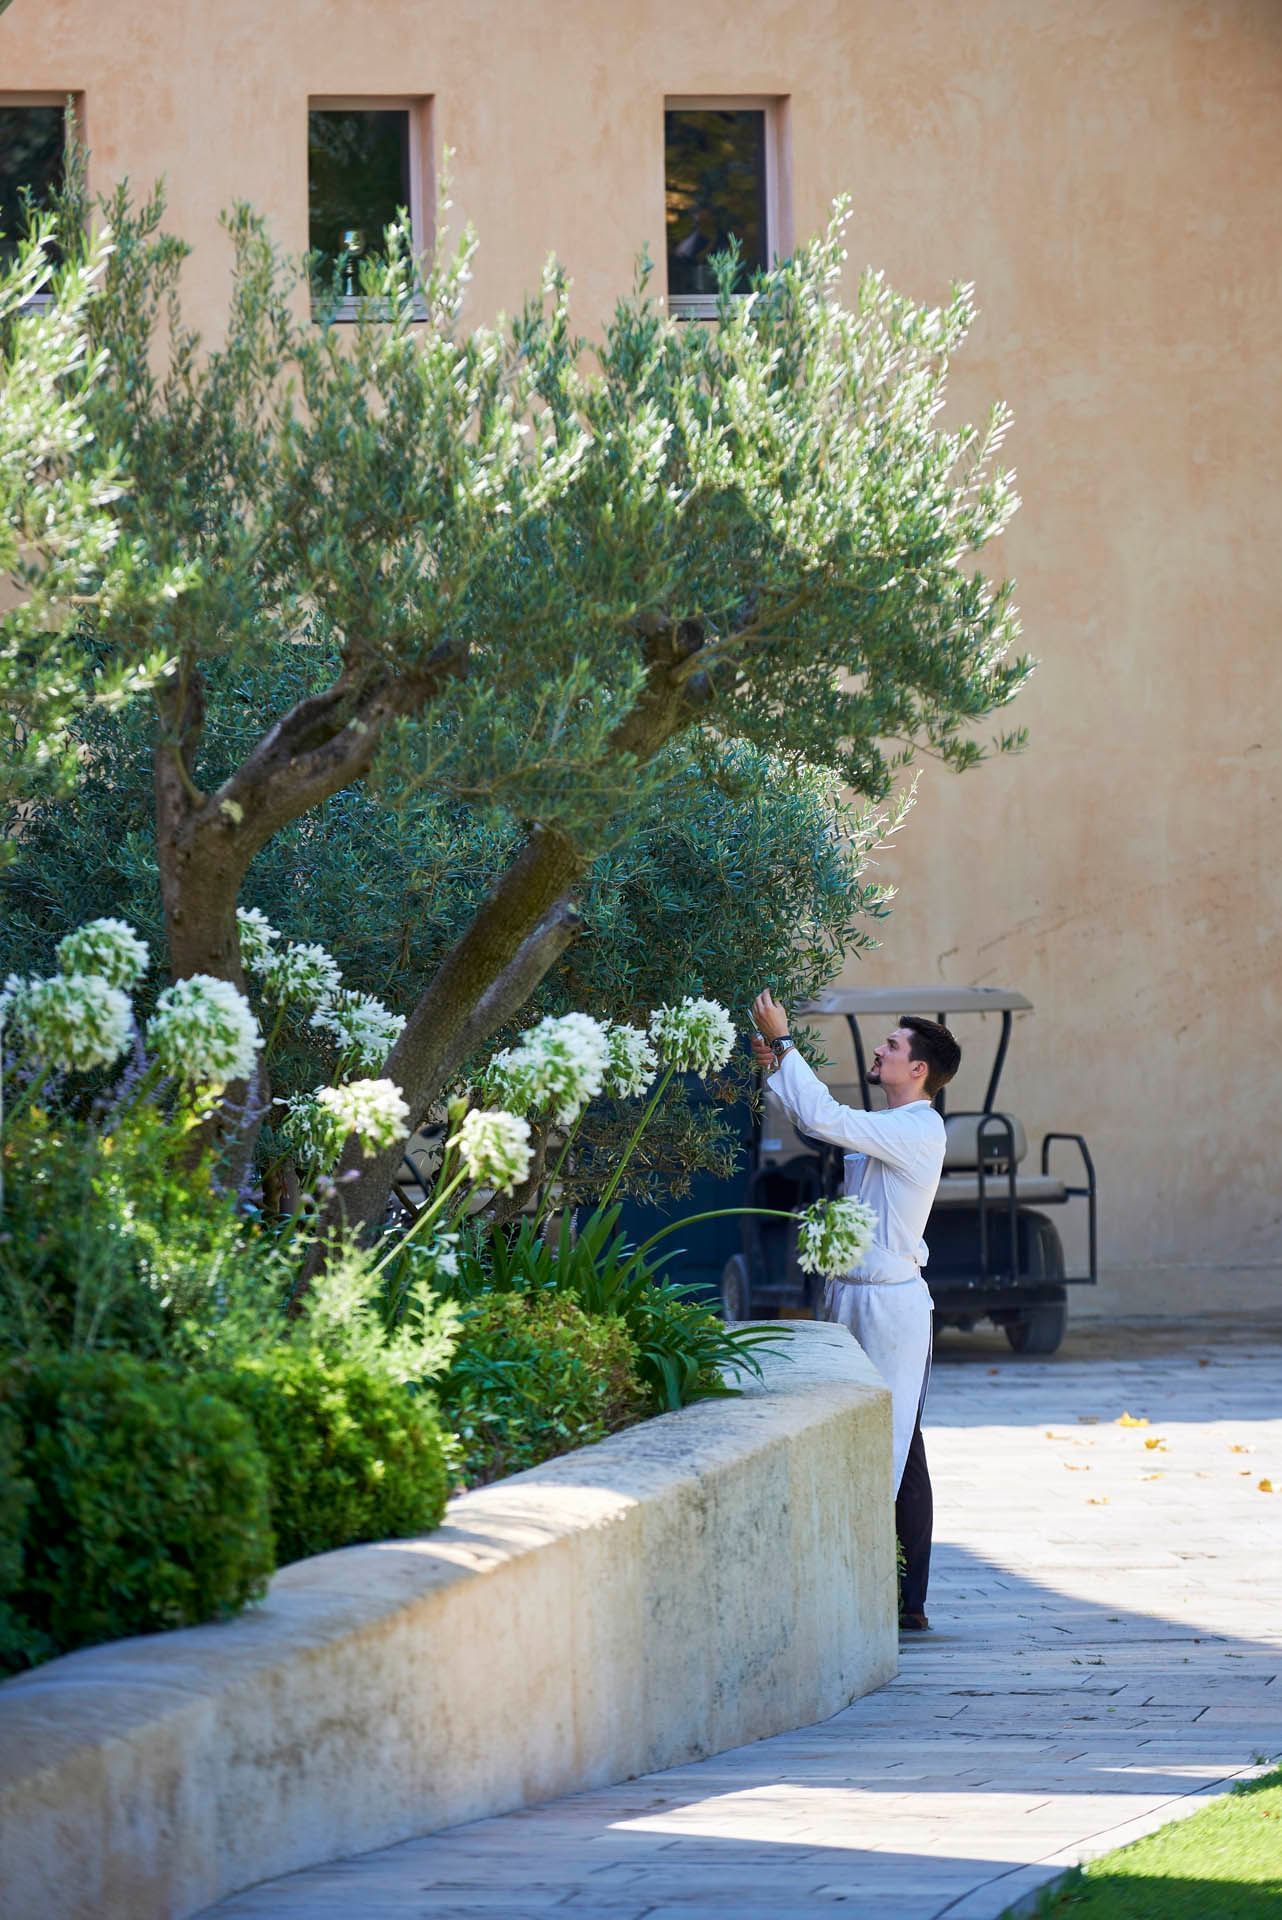 Man plucking flowers in garden at Domaine de Manville